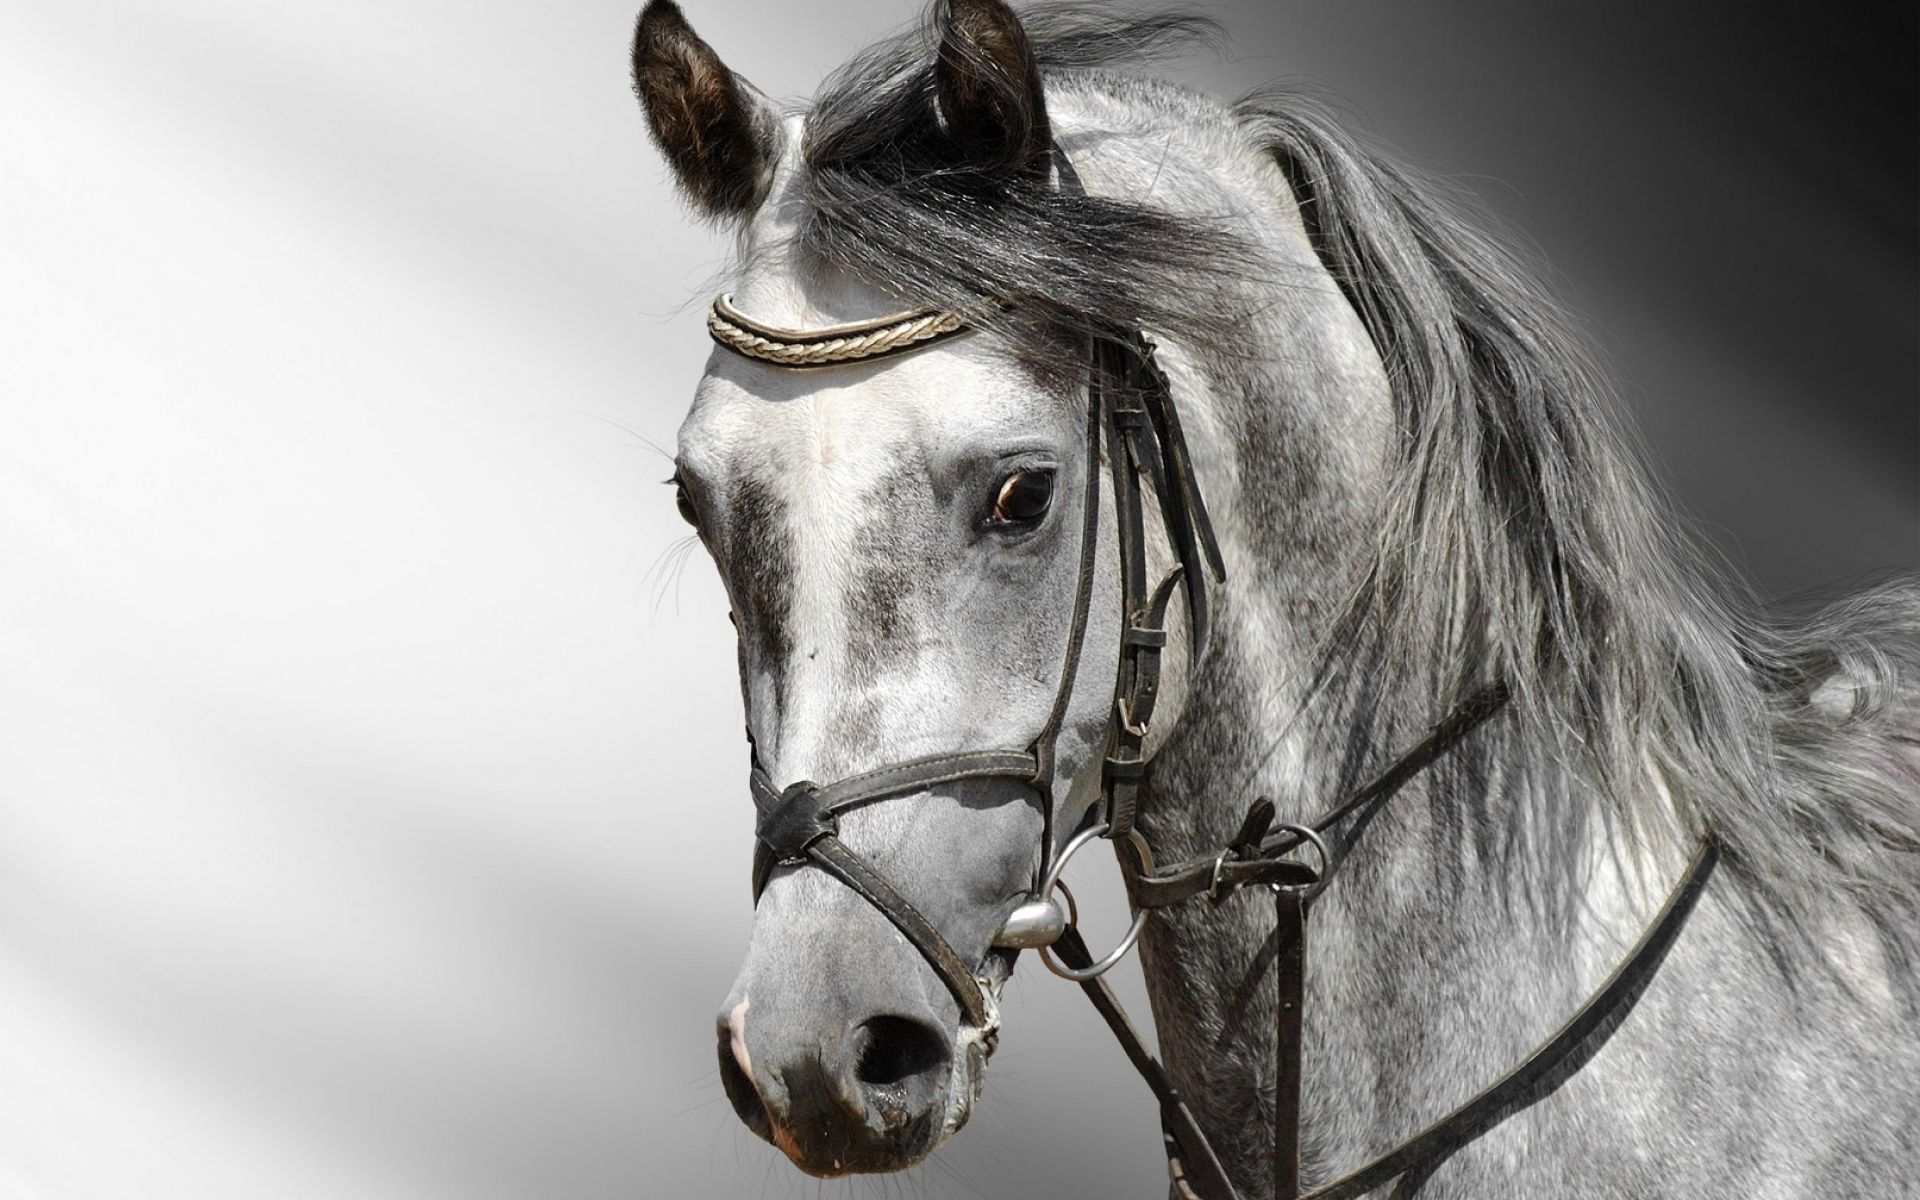 Arabian Horse Wallpaper